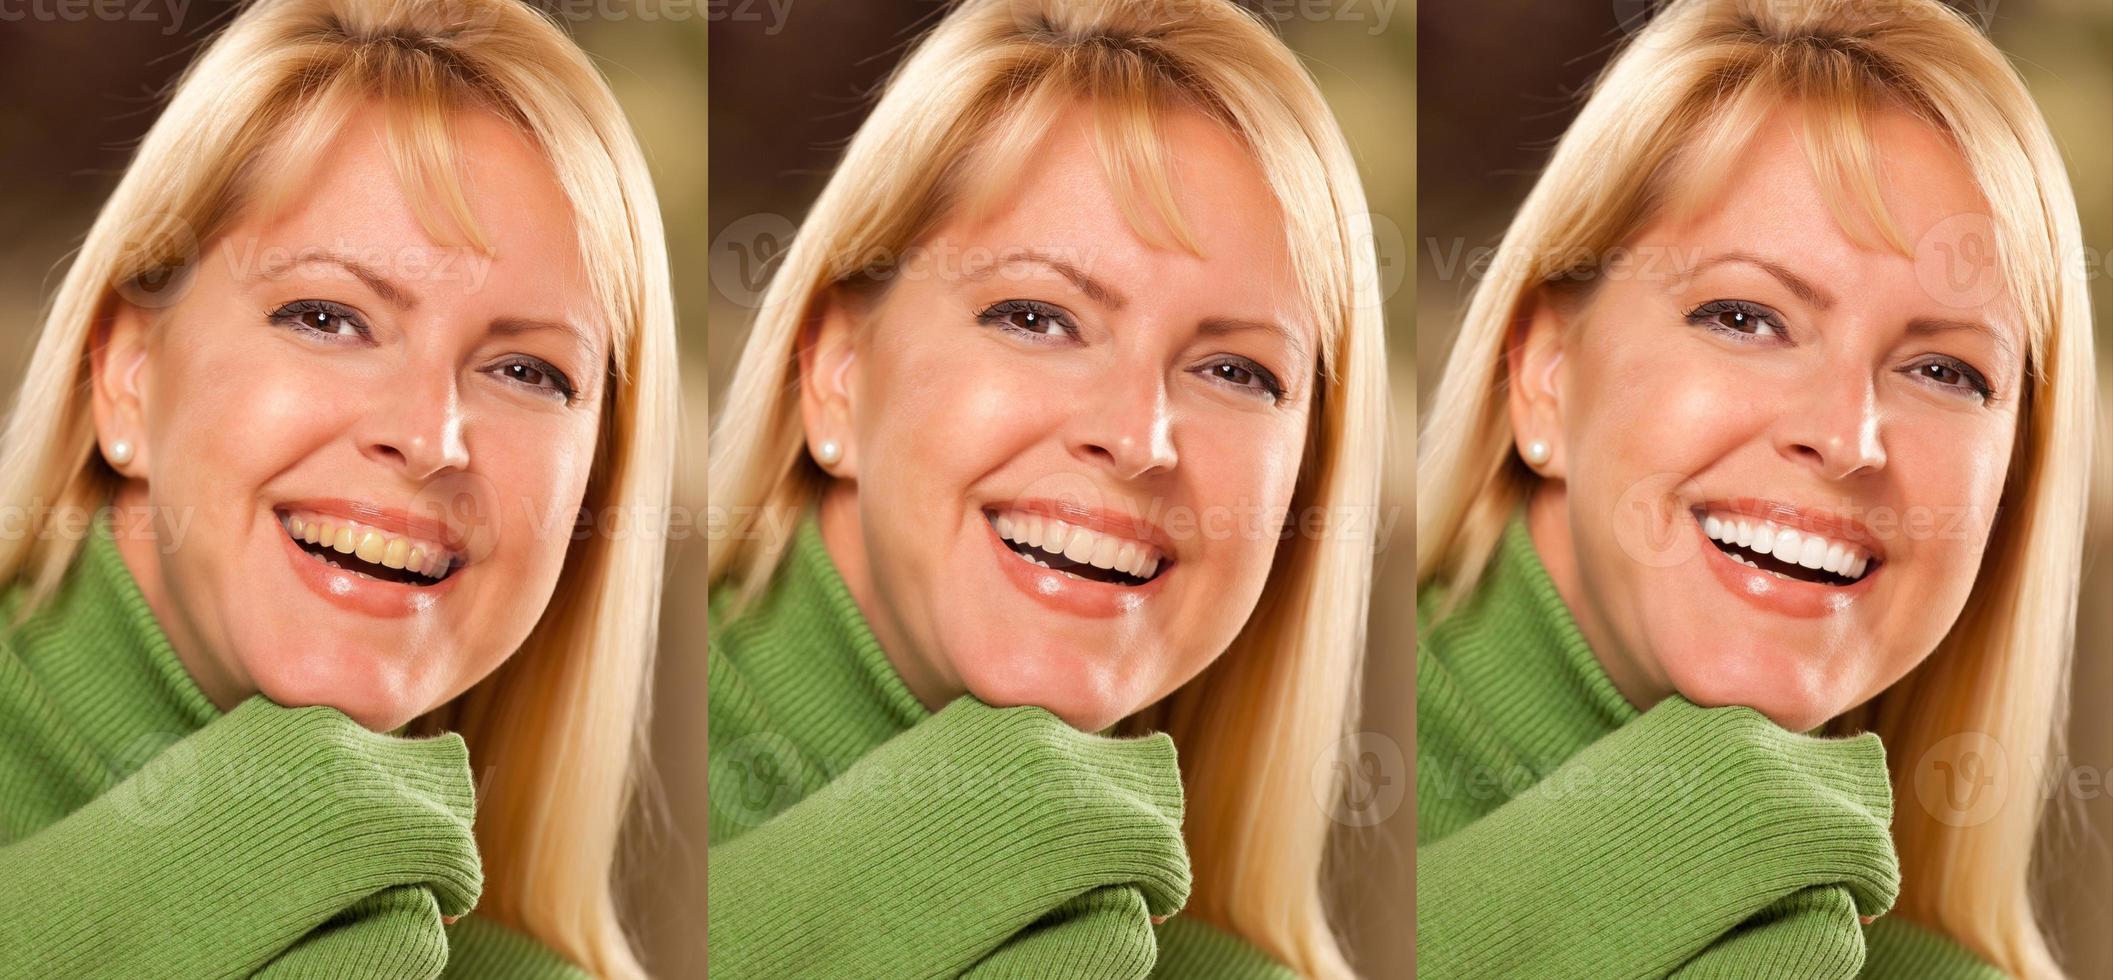 Smiling female showing progressive teeth whitening and bleaching. photo